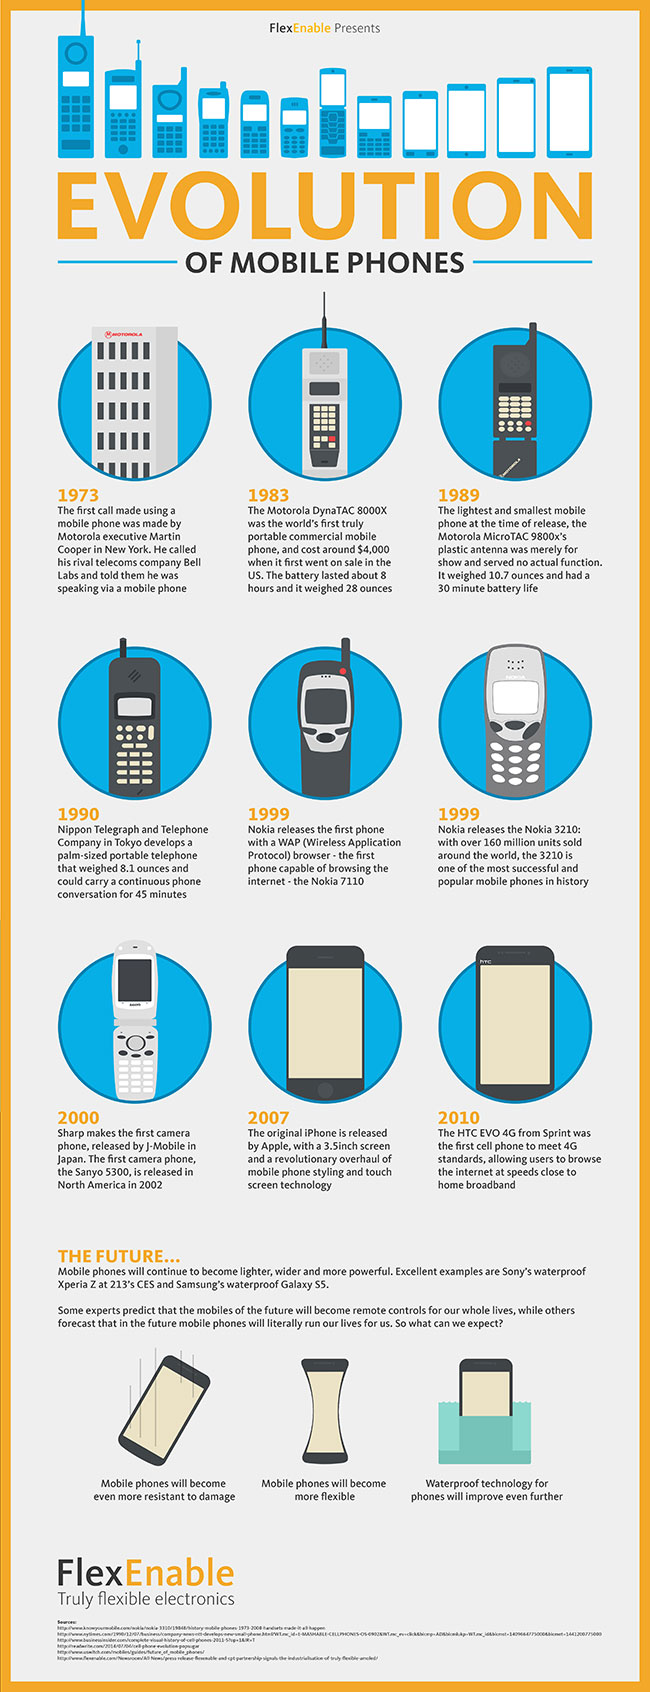 Evolution of Mobiles